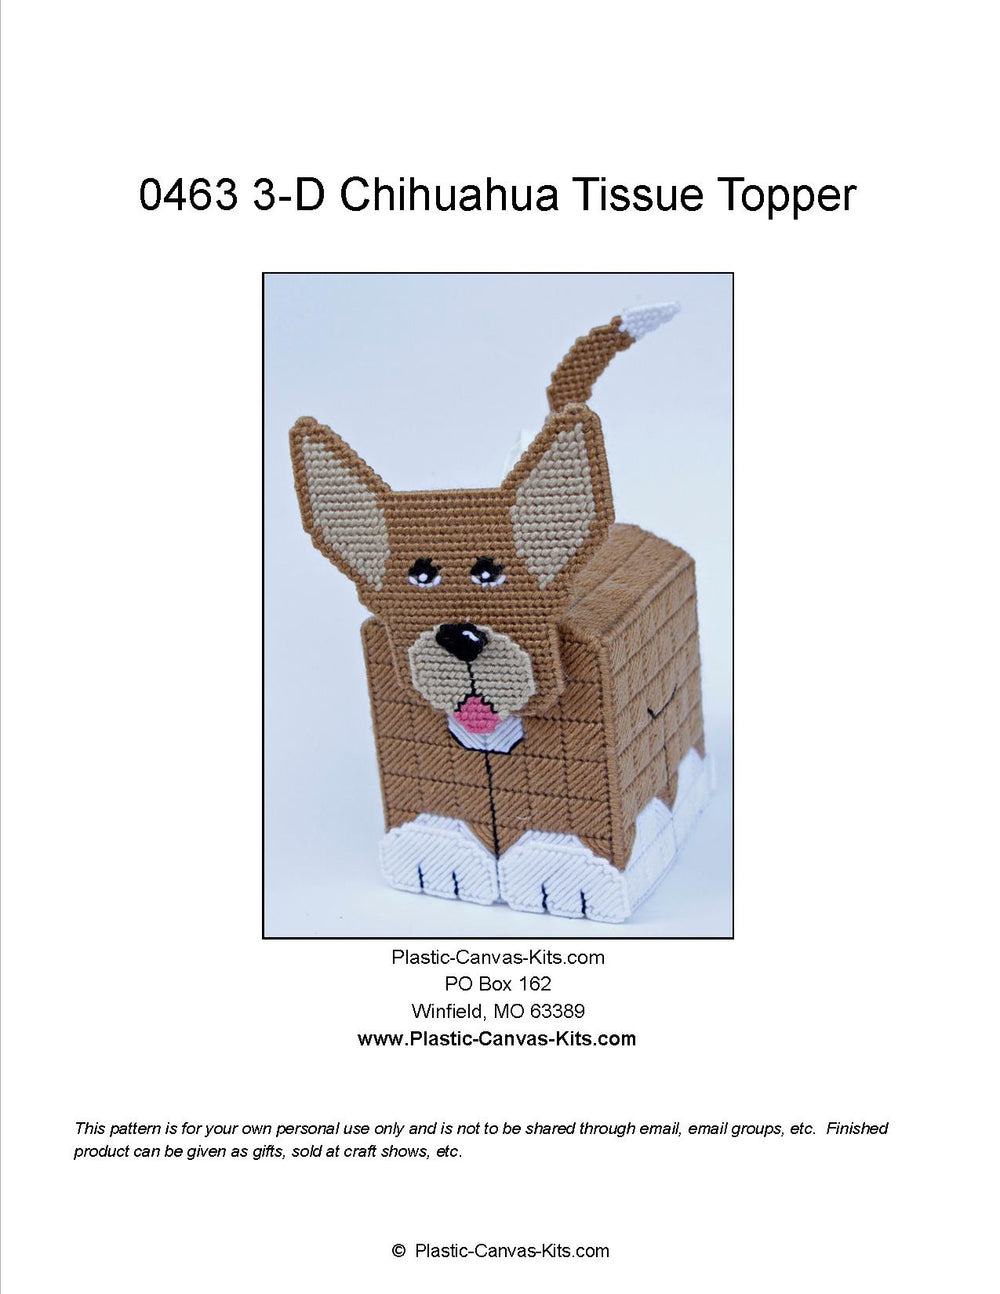 Chihuahua 3-D Tissue Topper